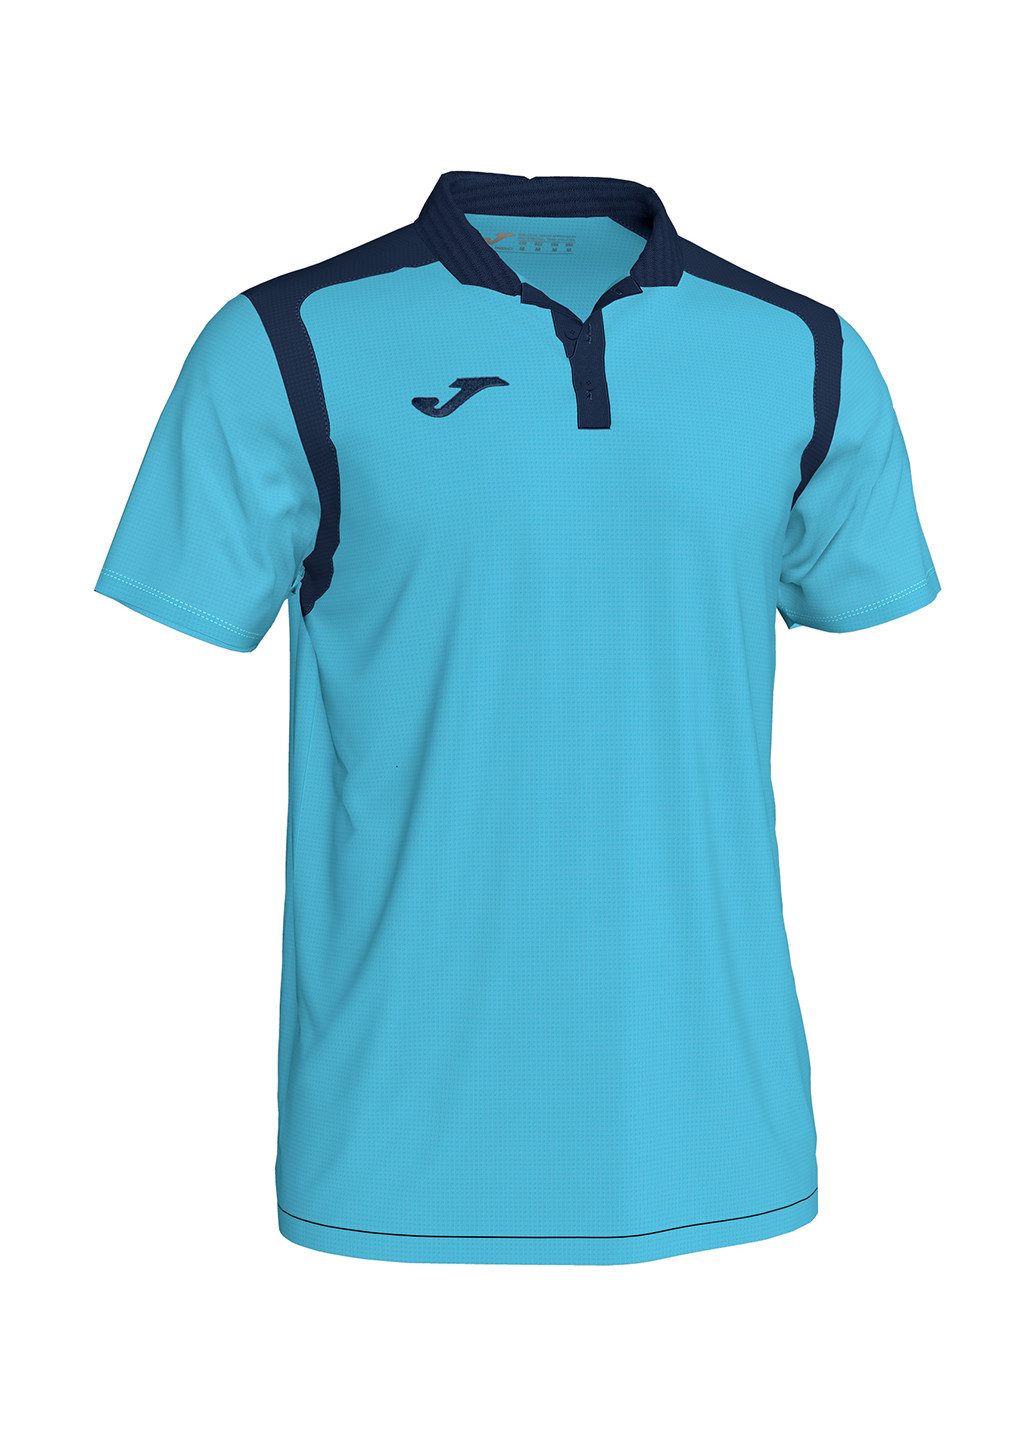 Голубой футболка-поло для мужчин Joma с логотипом